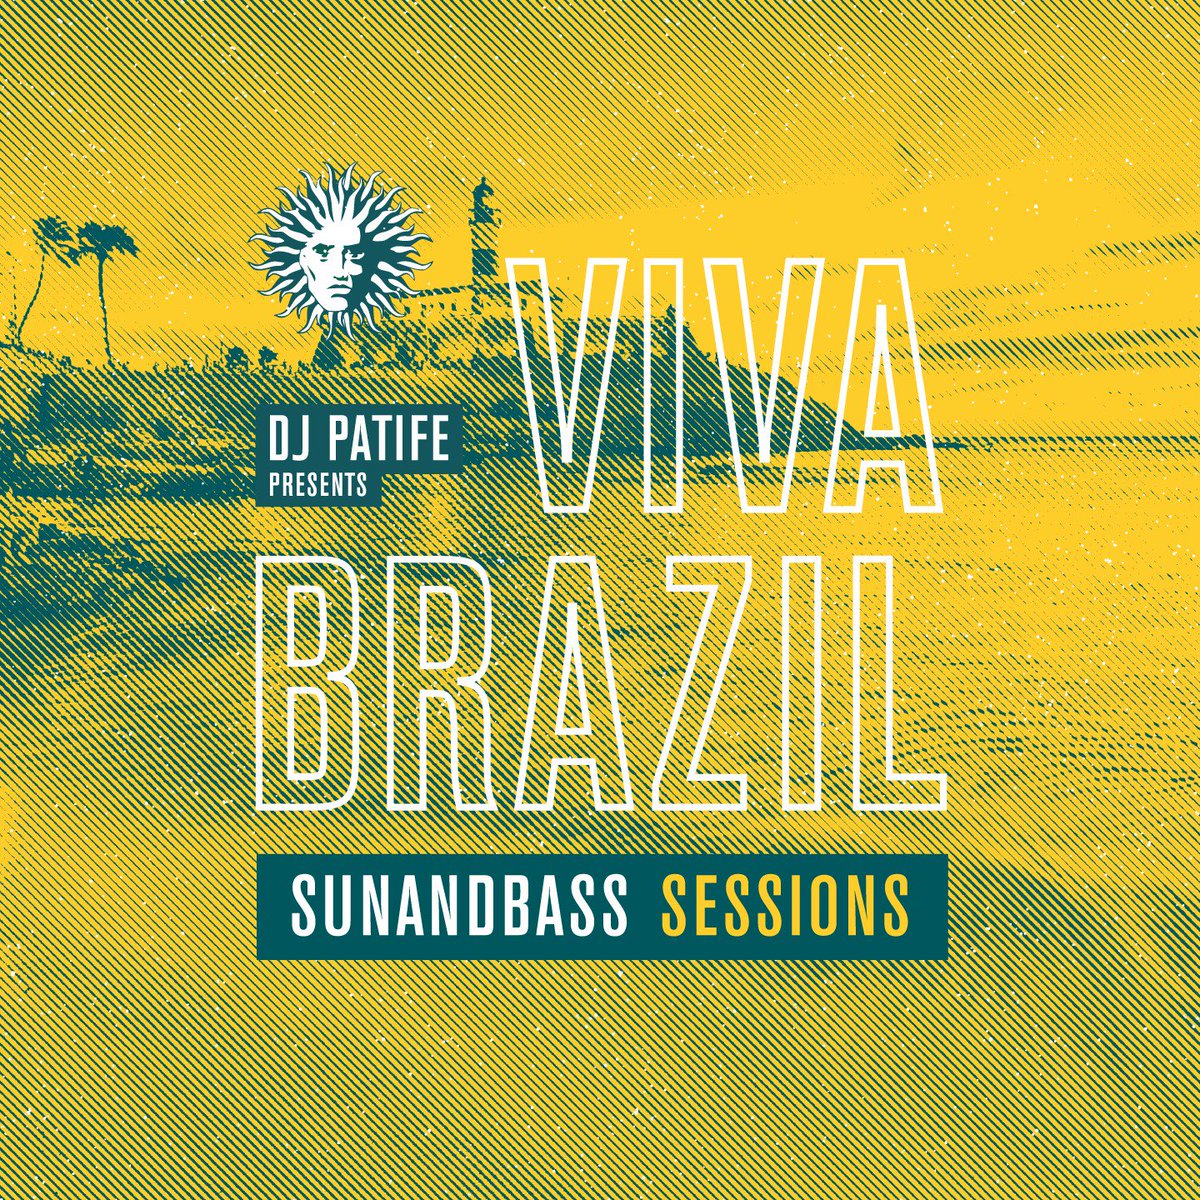 Viva Brazil! New music from @sunandbass @djpatife @mcsingingfats @alibi_dnb @Command_Strange @simplification1 & more bit.ly/go-plv079